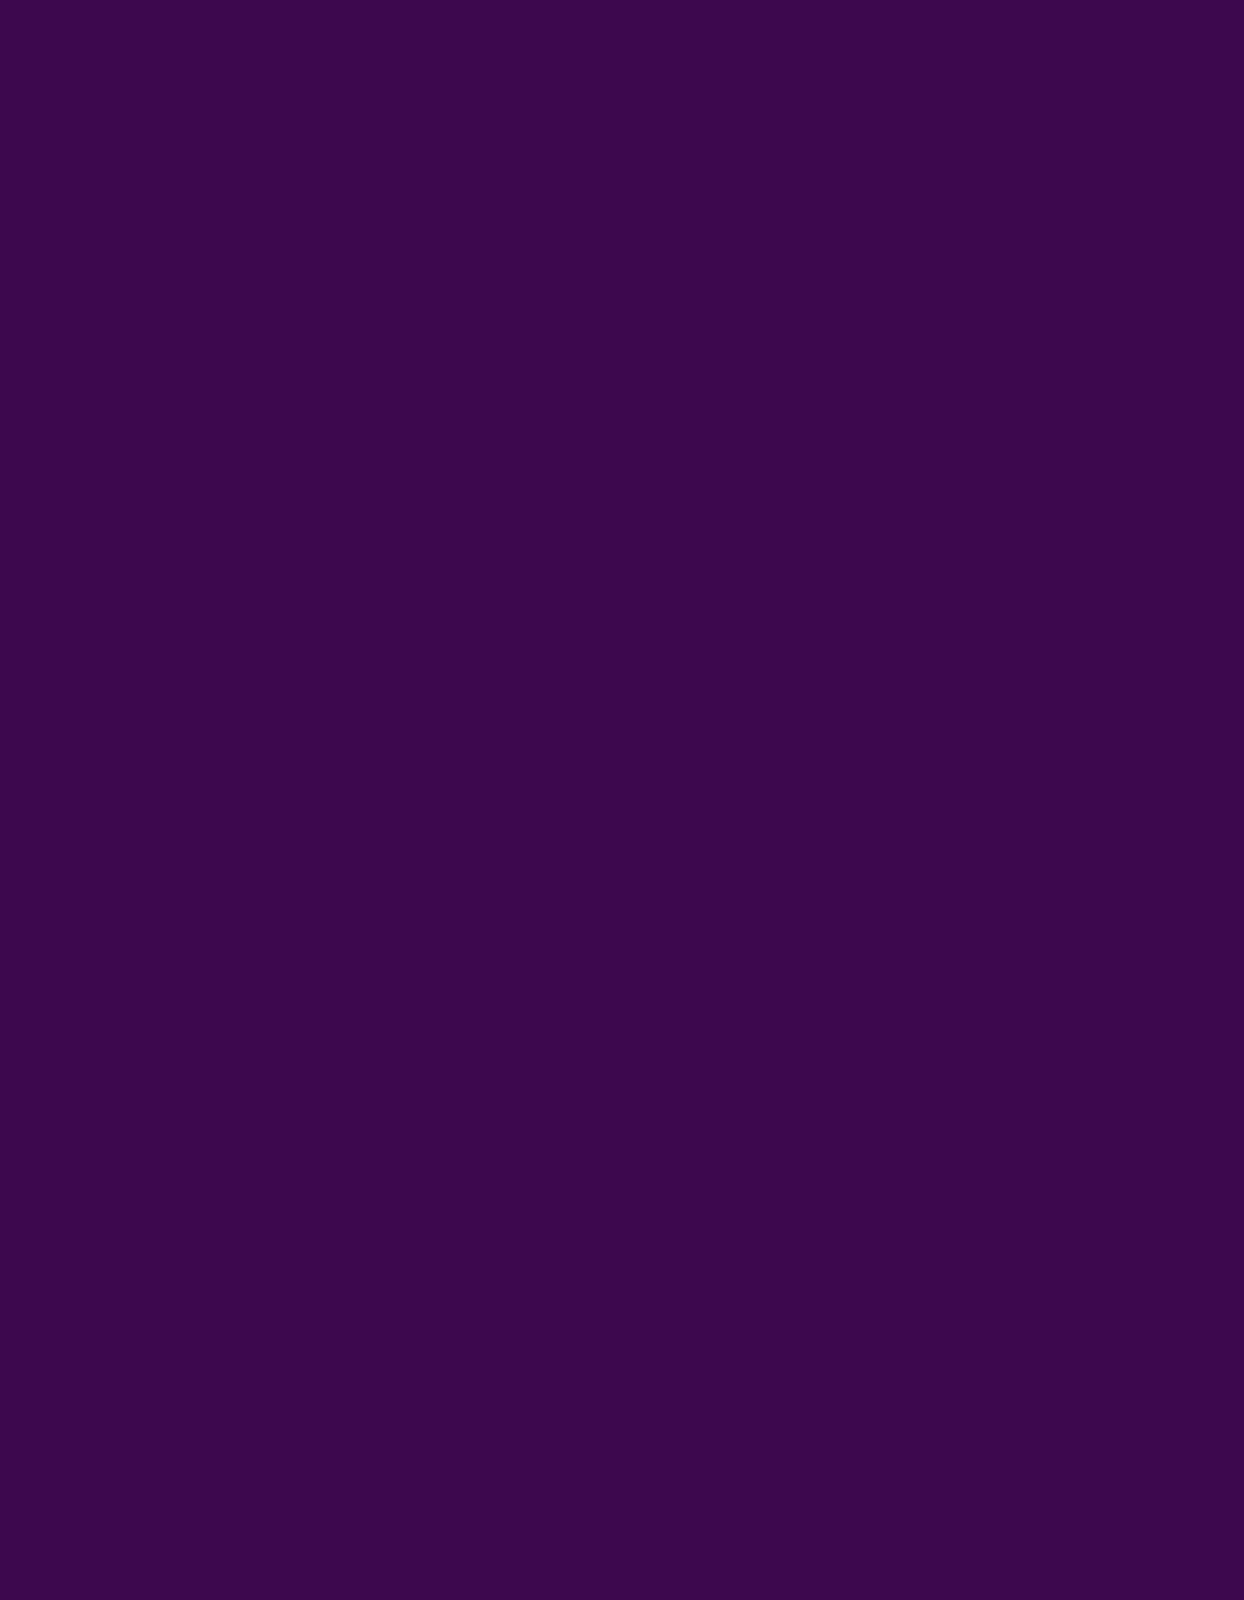 Dalevida A Tu Apariencia Con Un Fondo De Pantalla De Color Púrpura Sólido. Fondo de pantalla